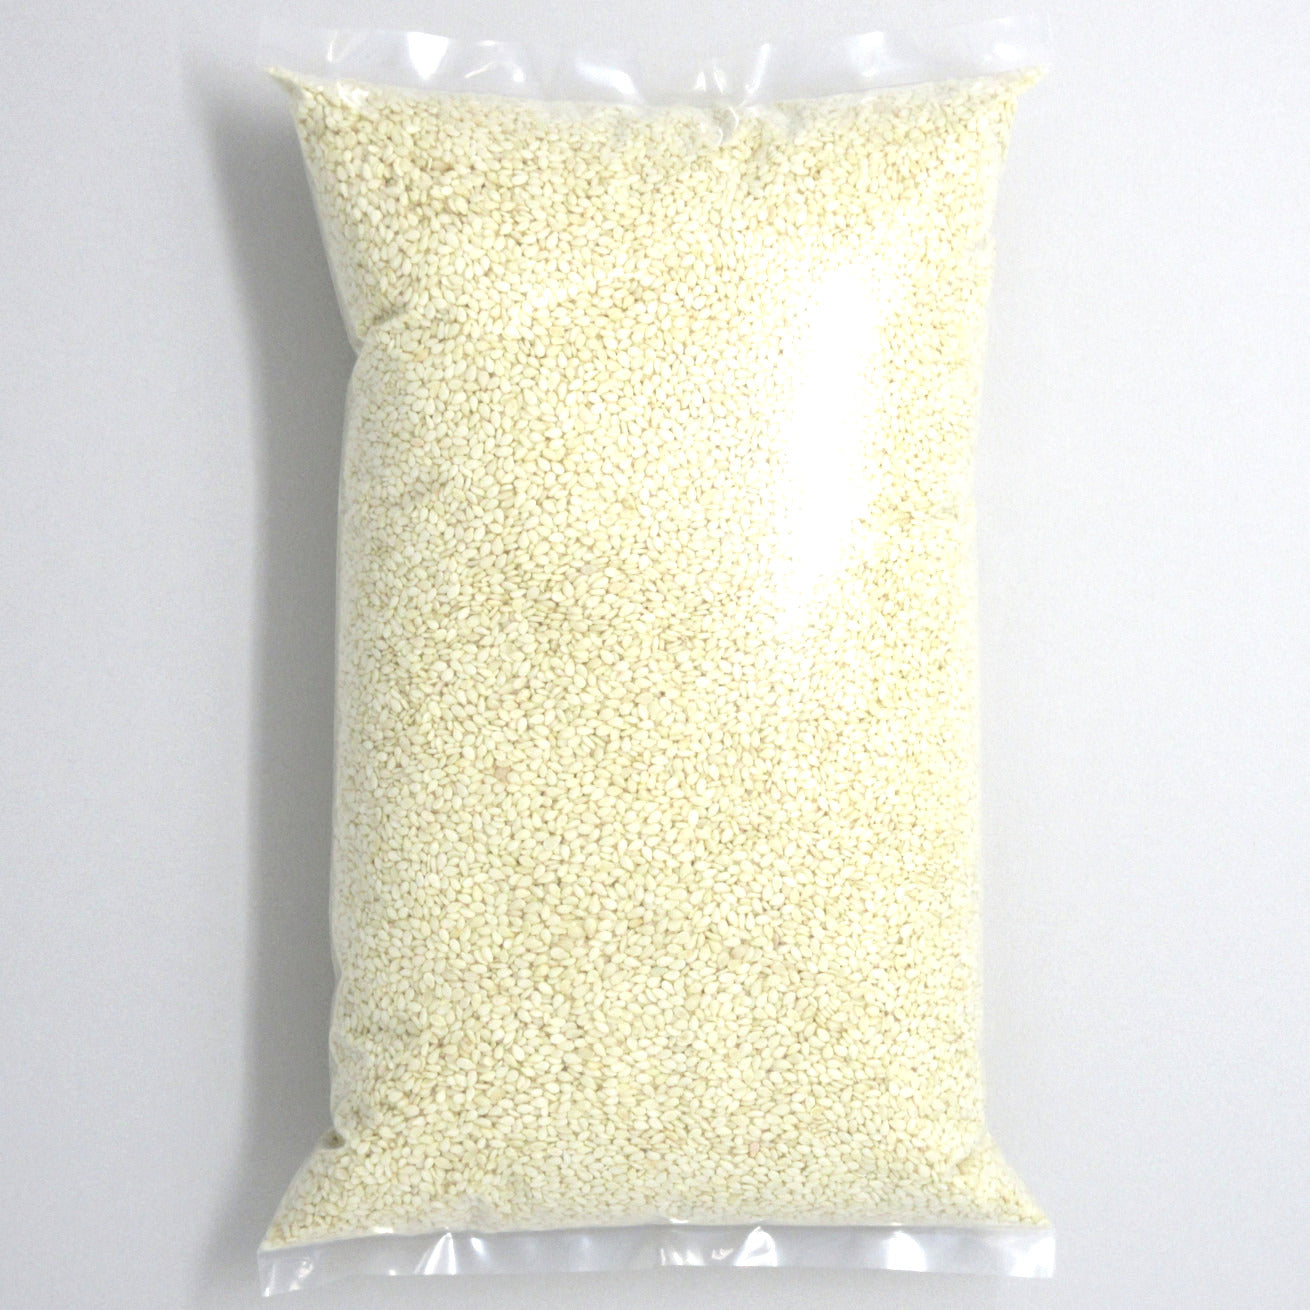 Flour Barrel product image - Sesame Seeds